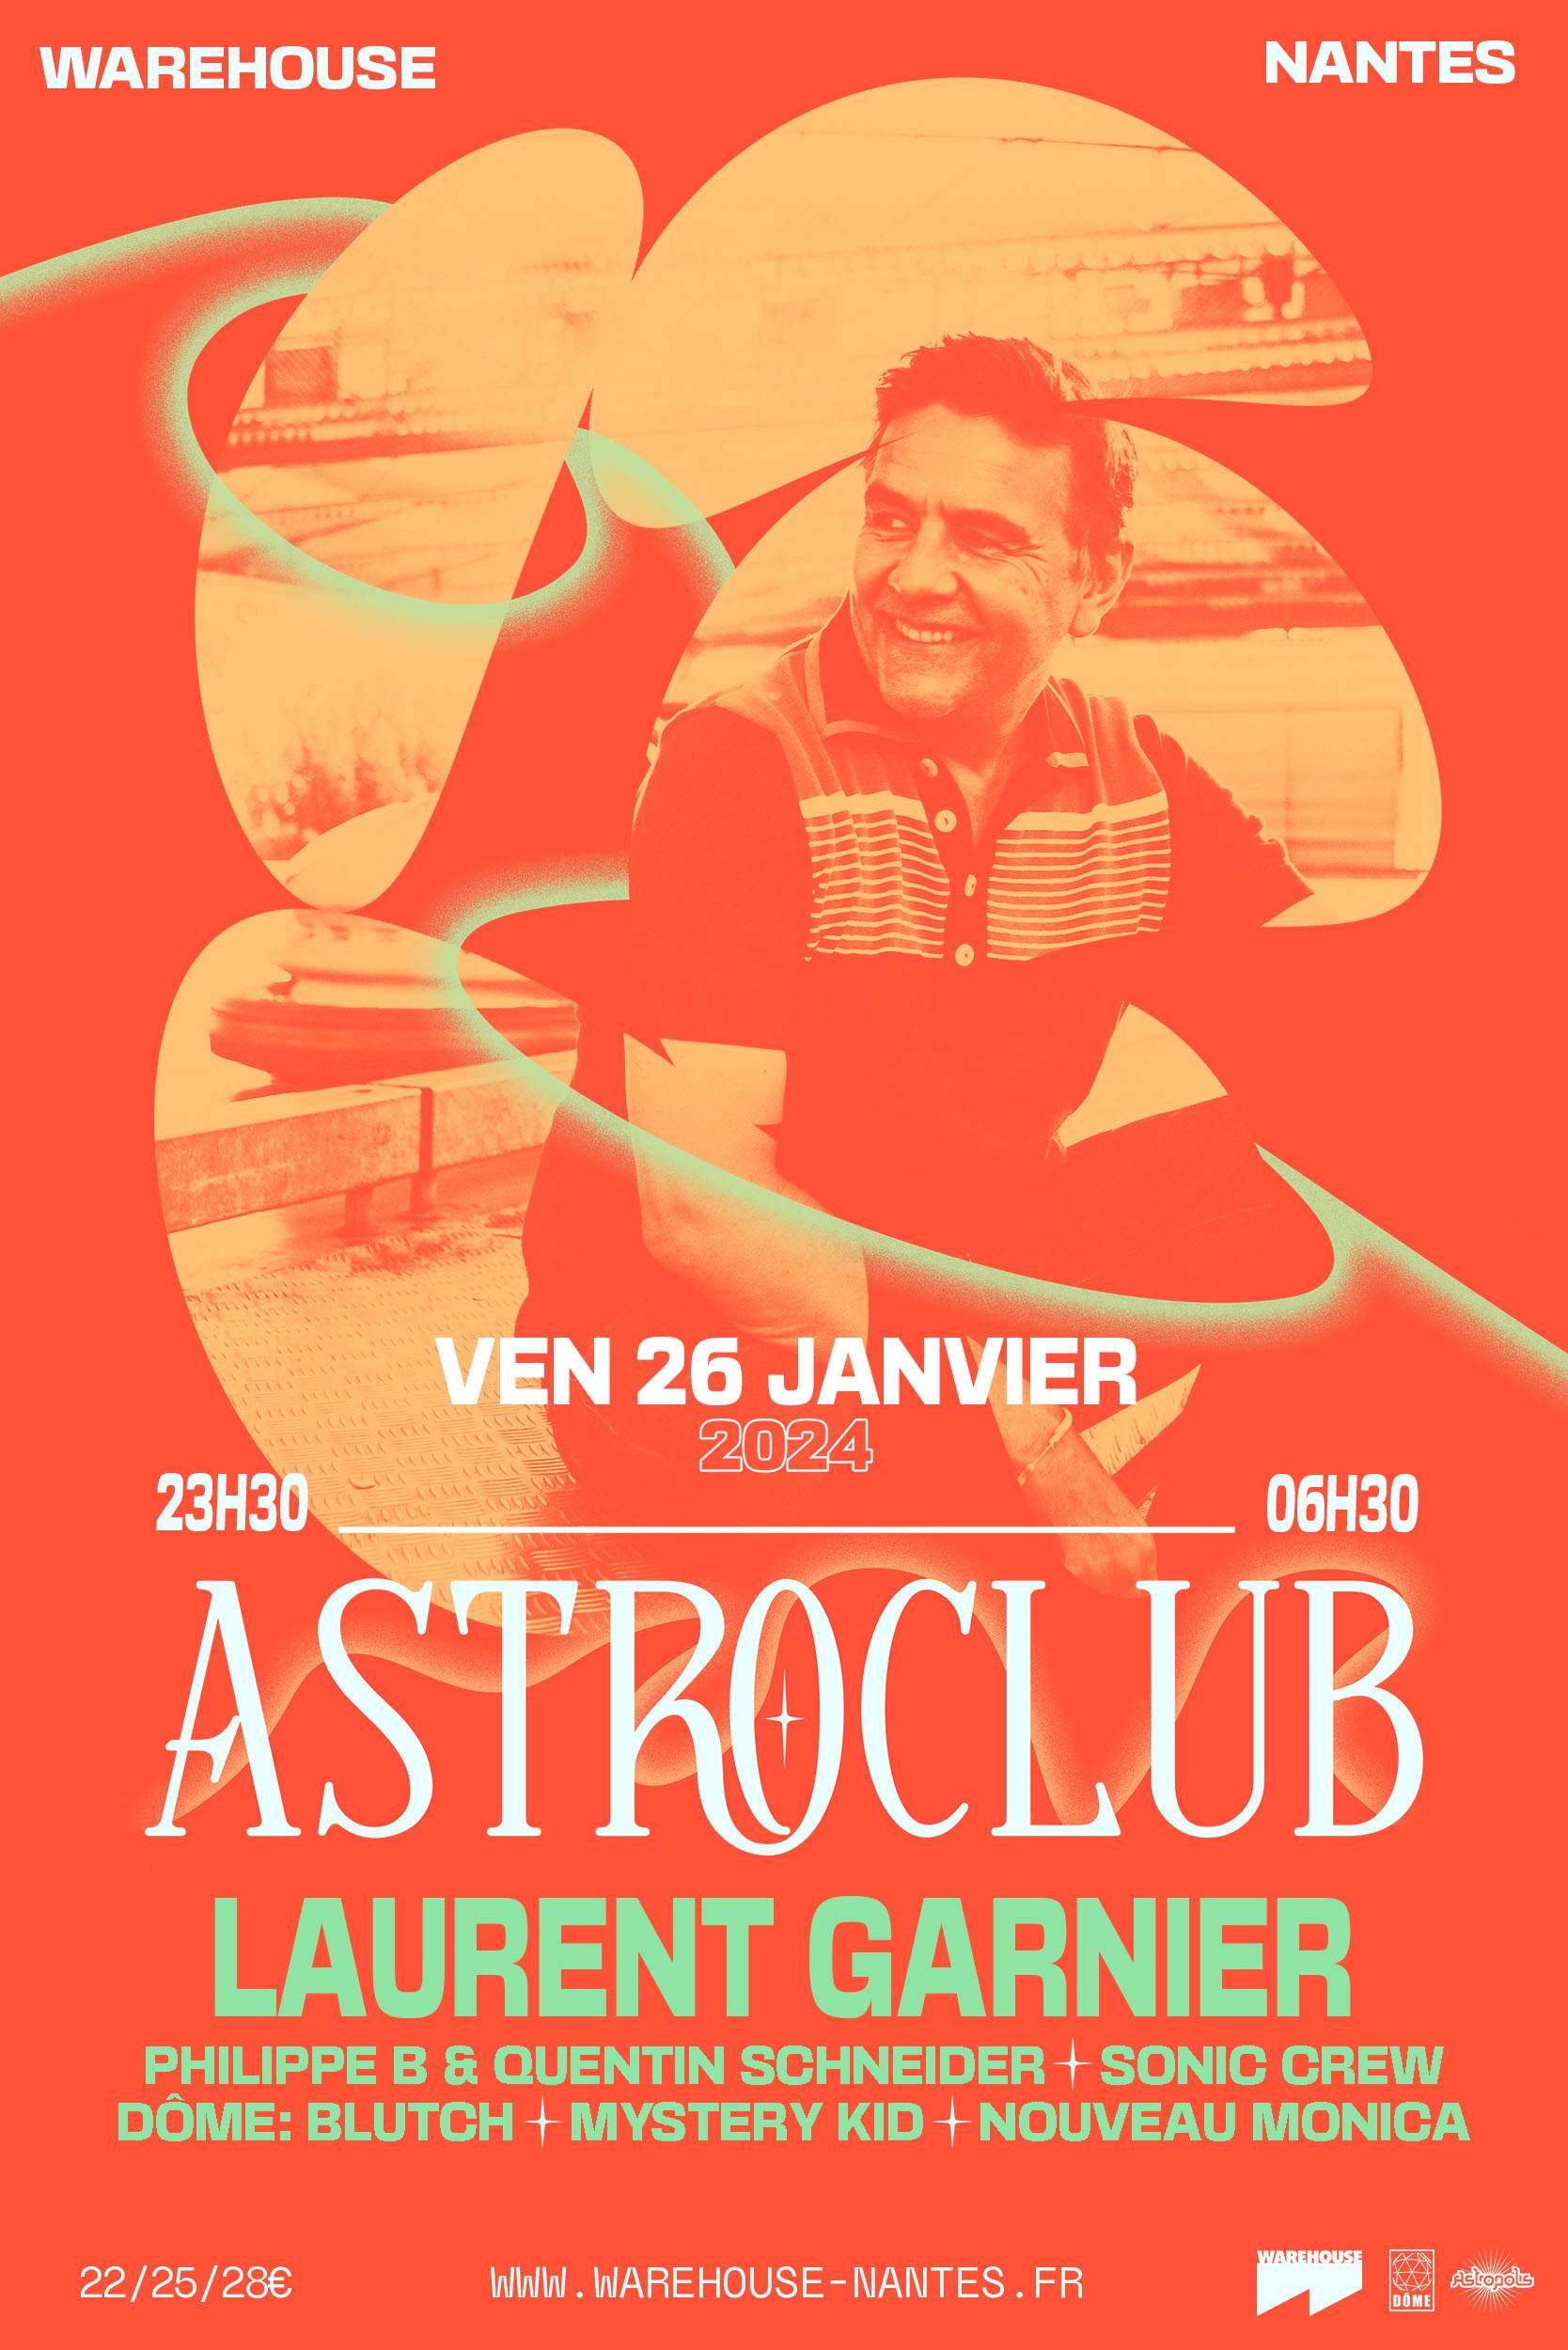 Astroclub: Laurent Garnier (Warehouse - Nantes) - Página frontal